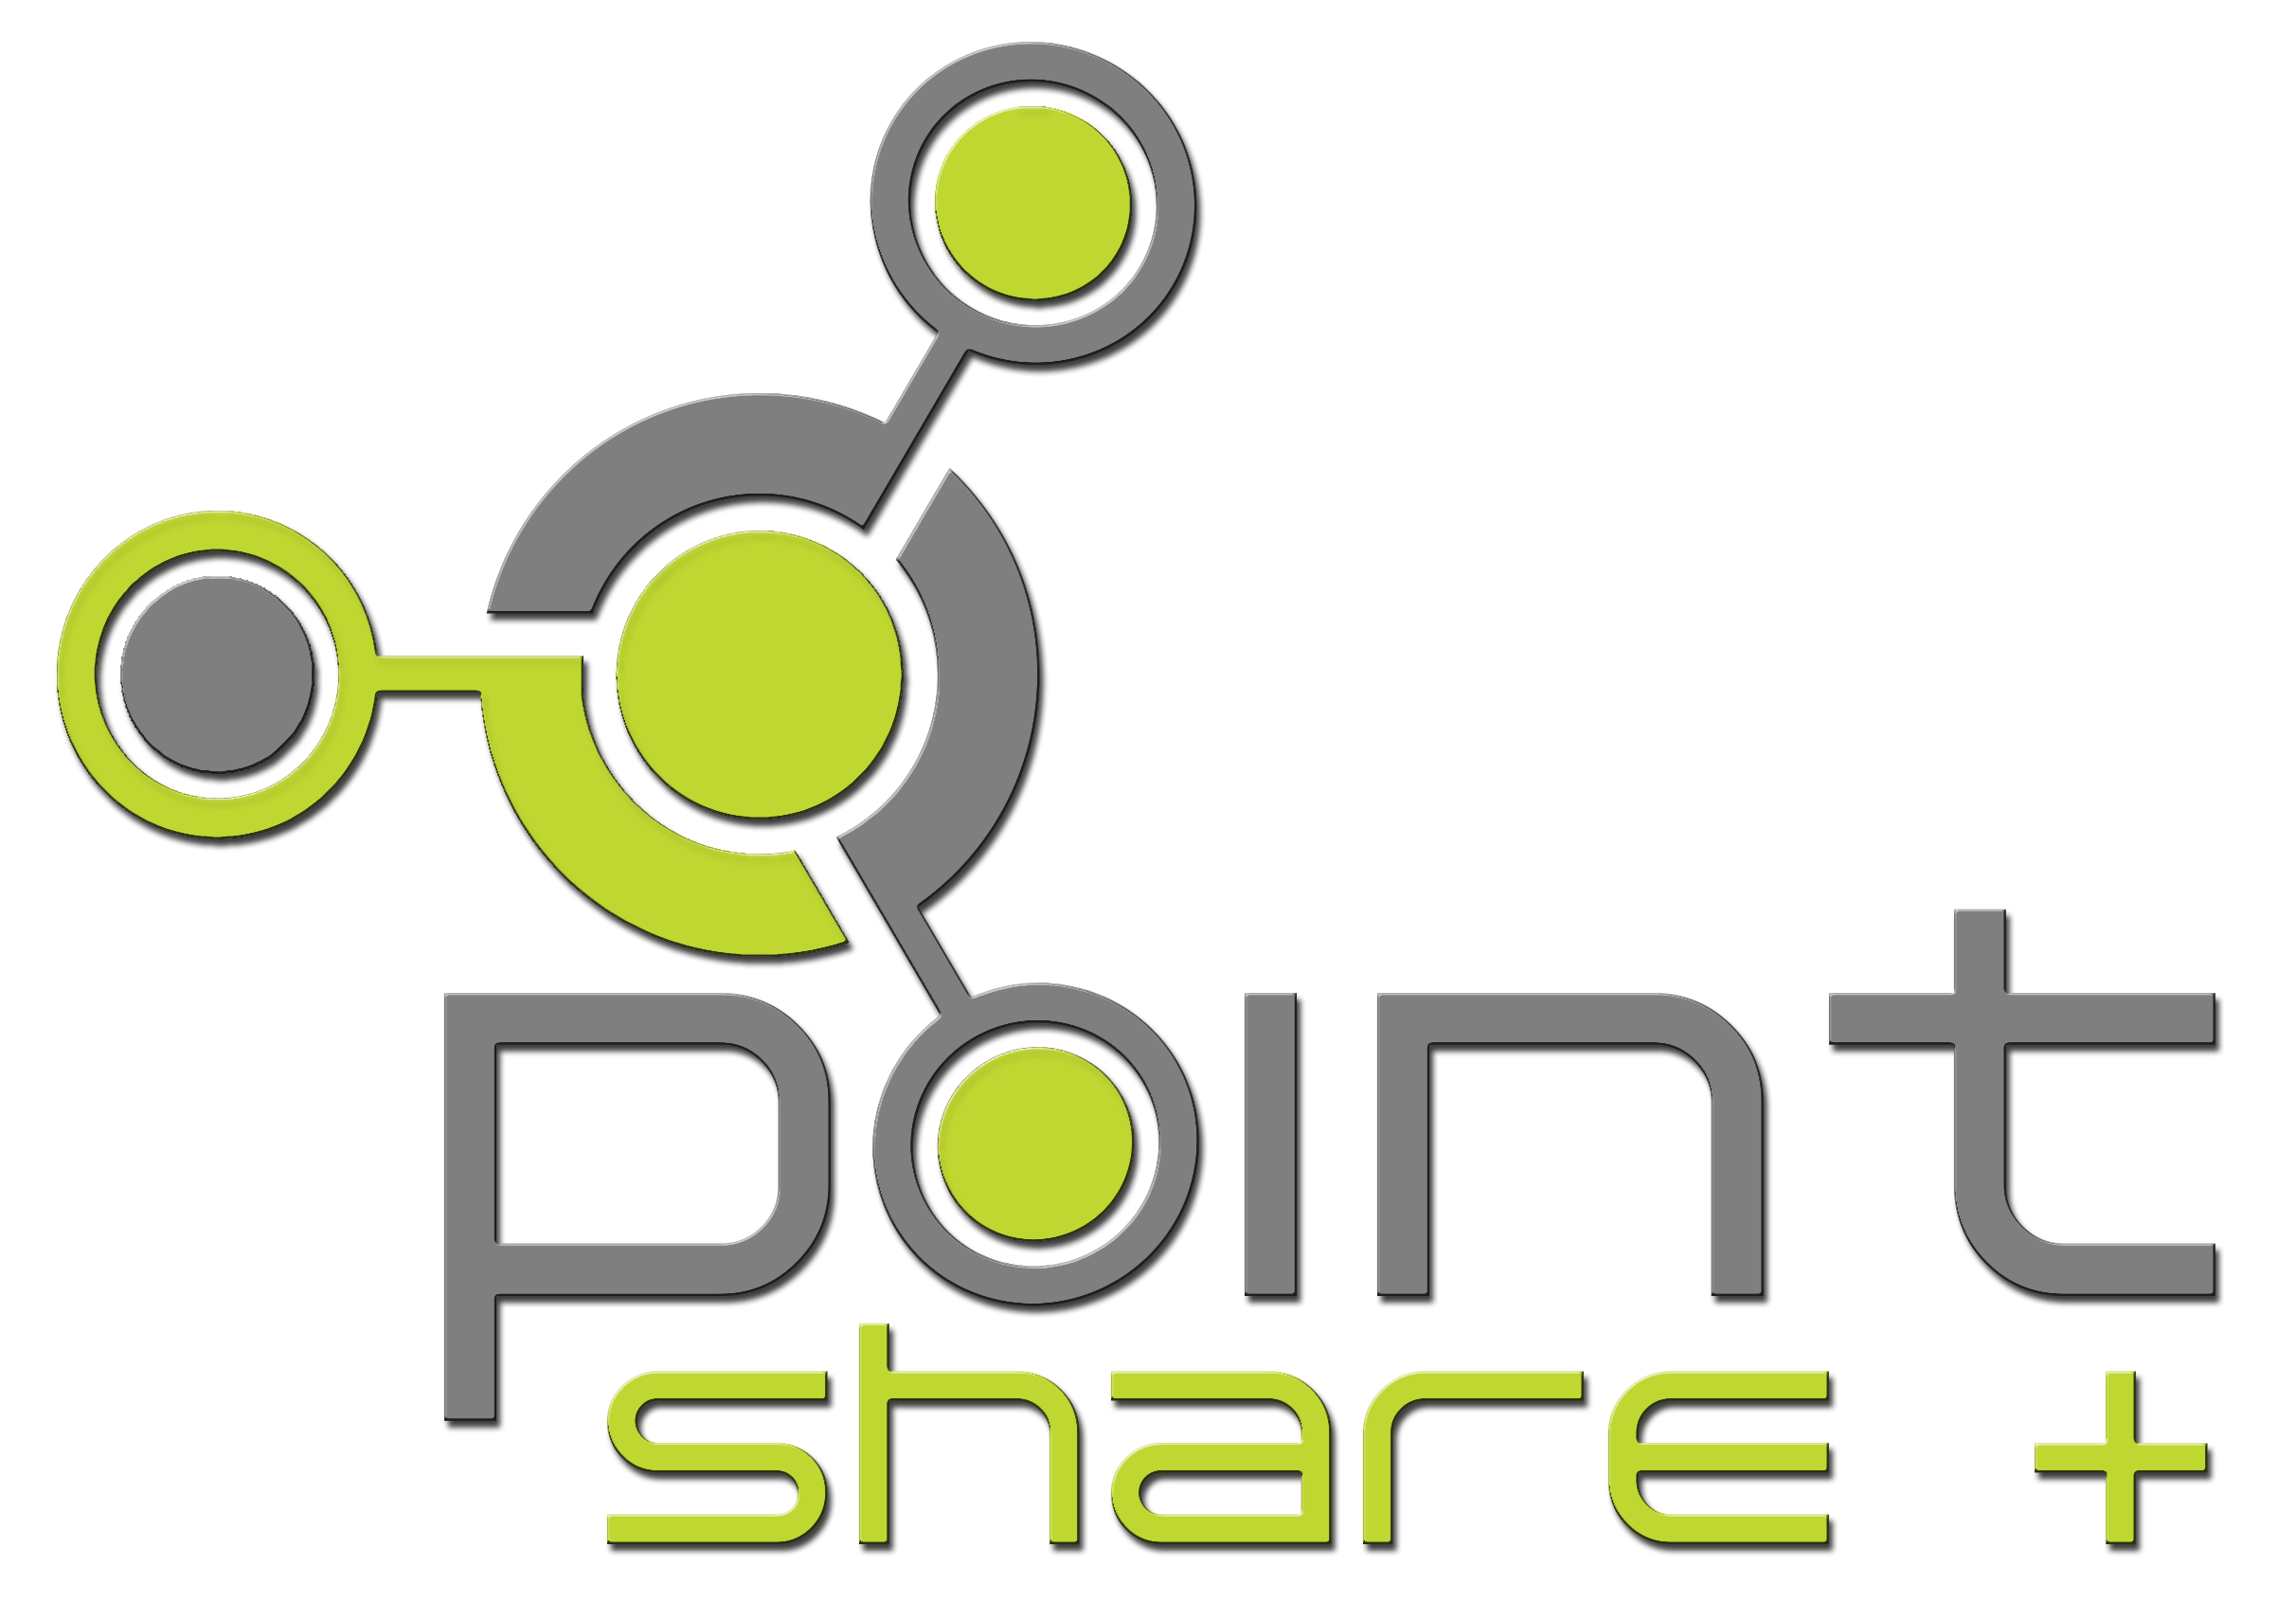 PointSharePlus